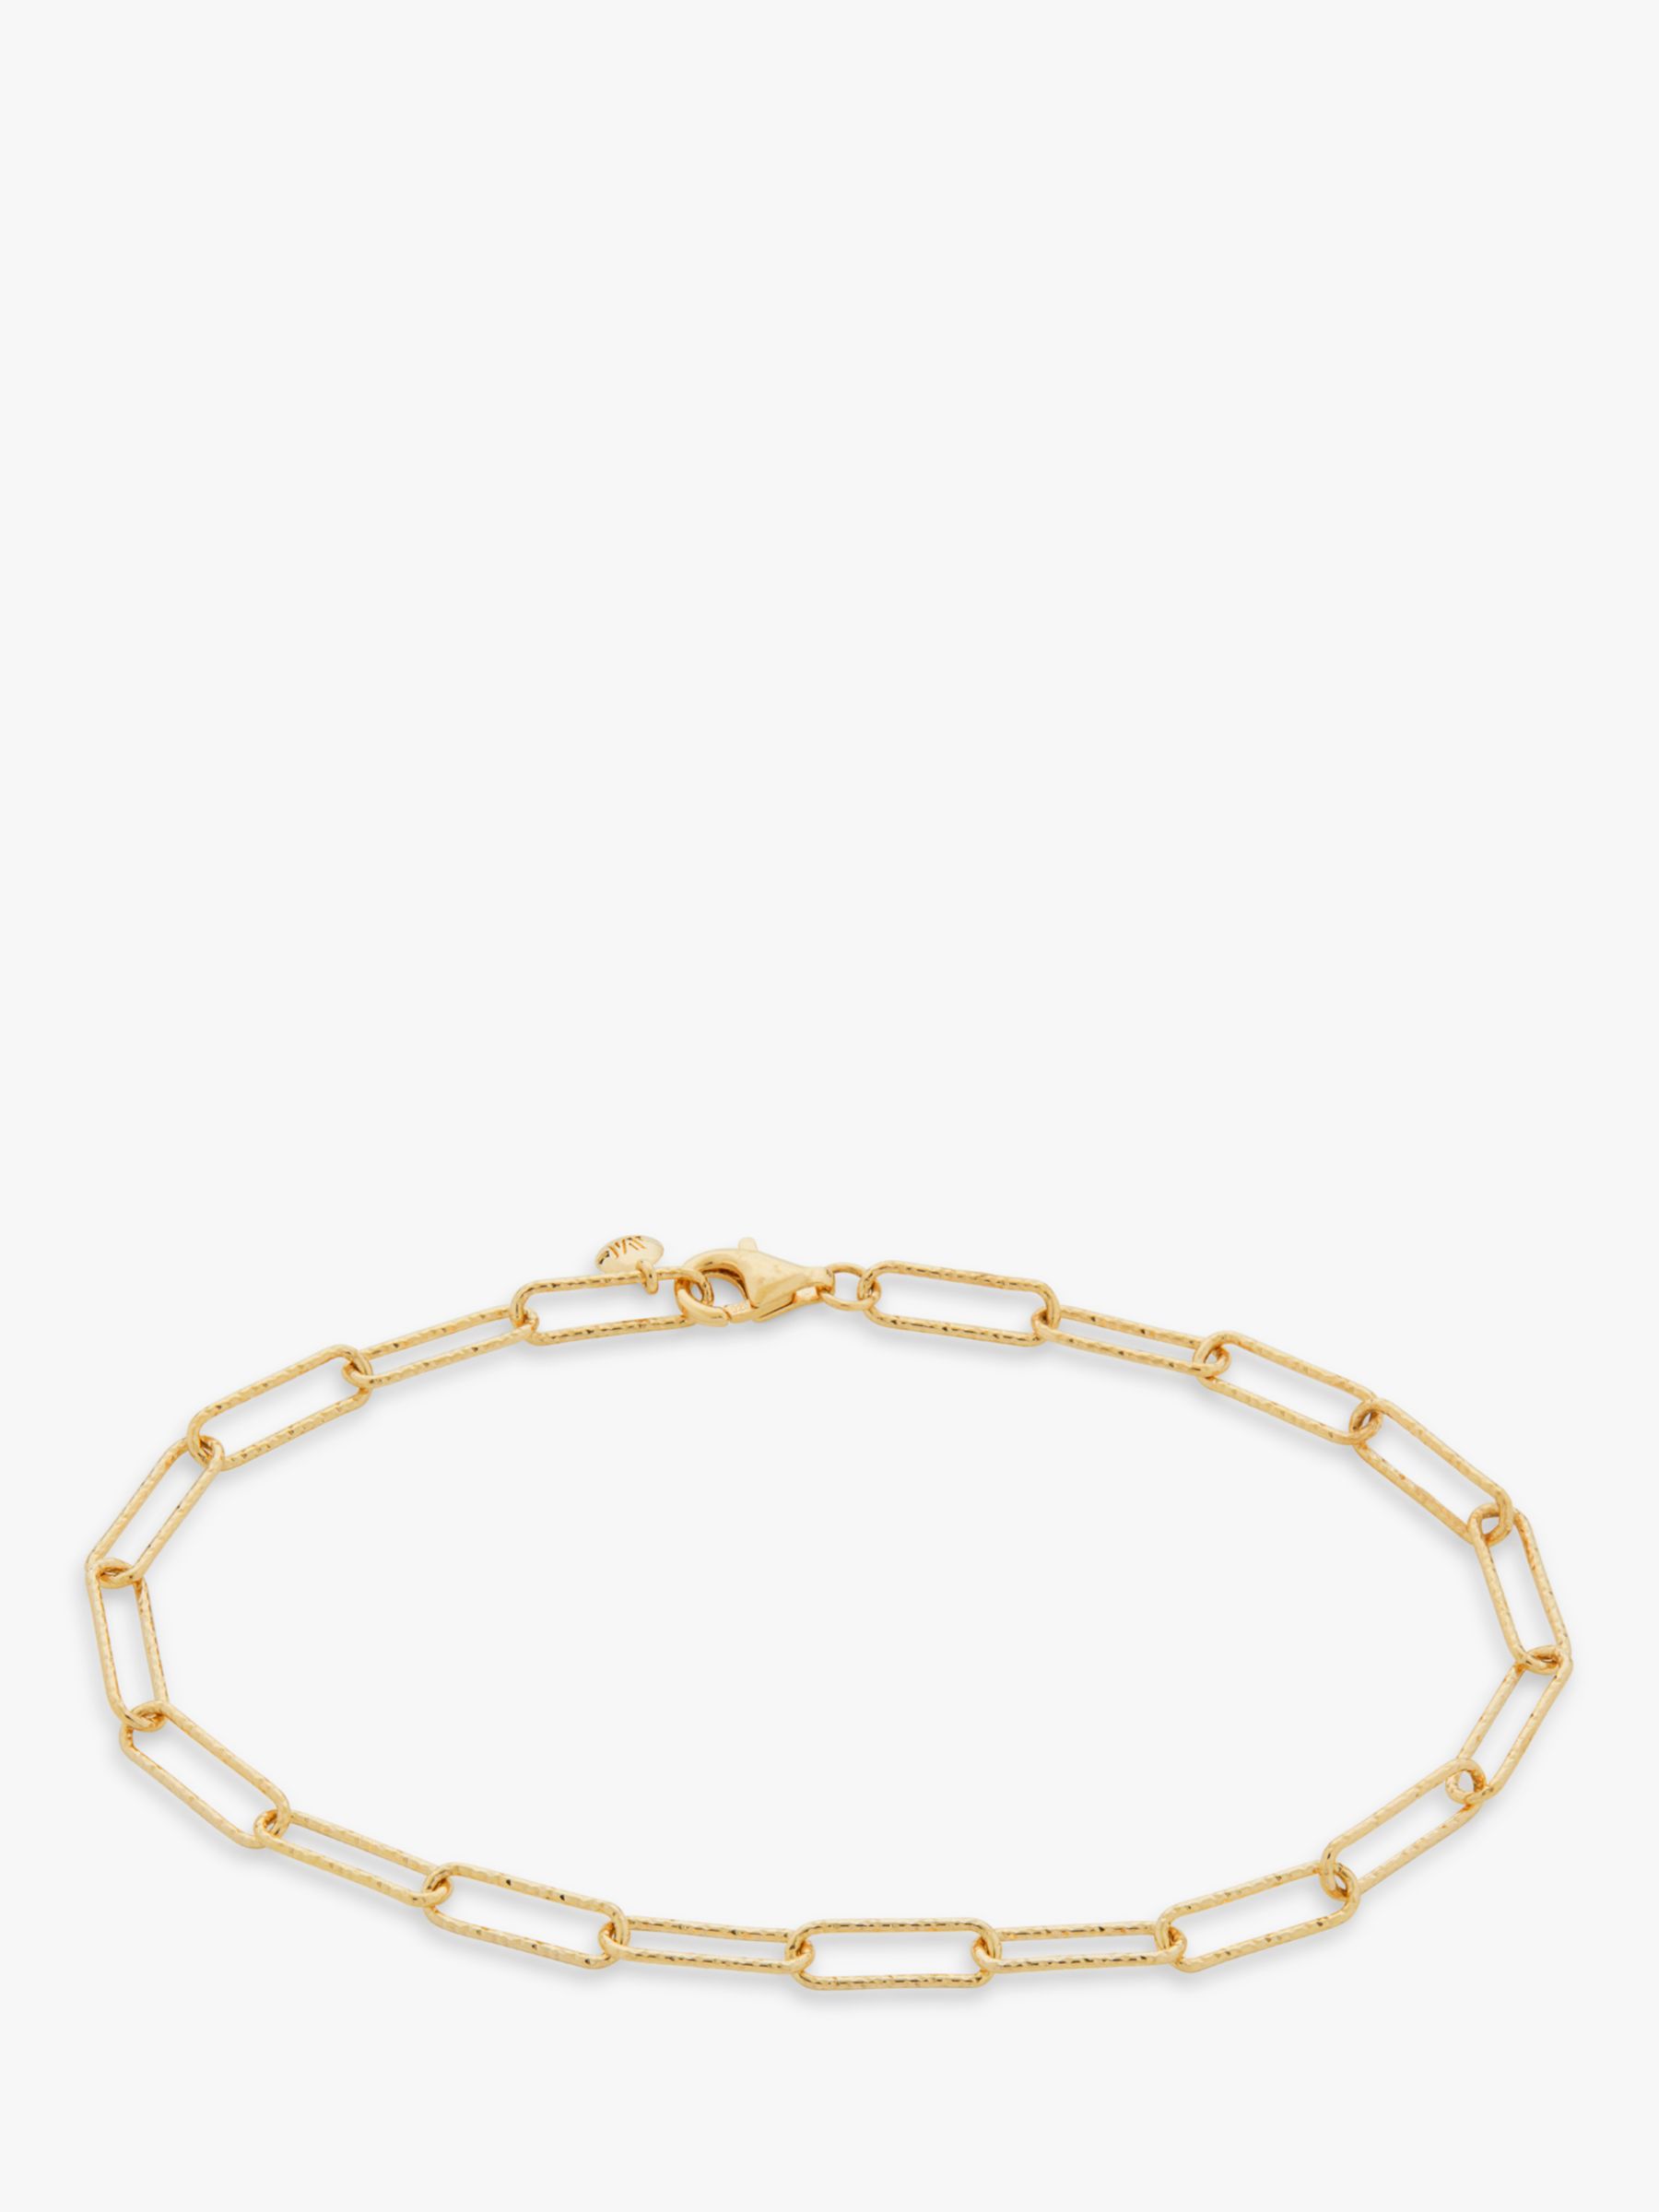 Monica Vinader Alta Textured Chain Bracelet, Gold